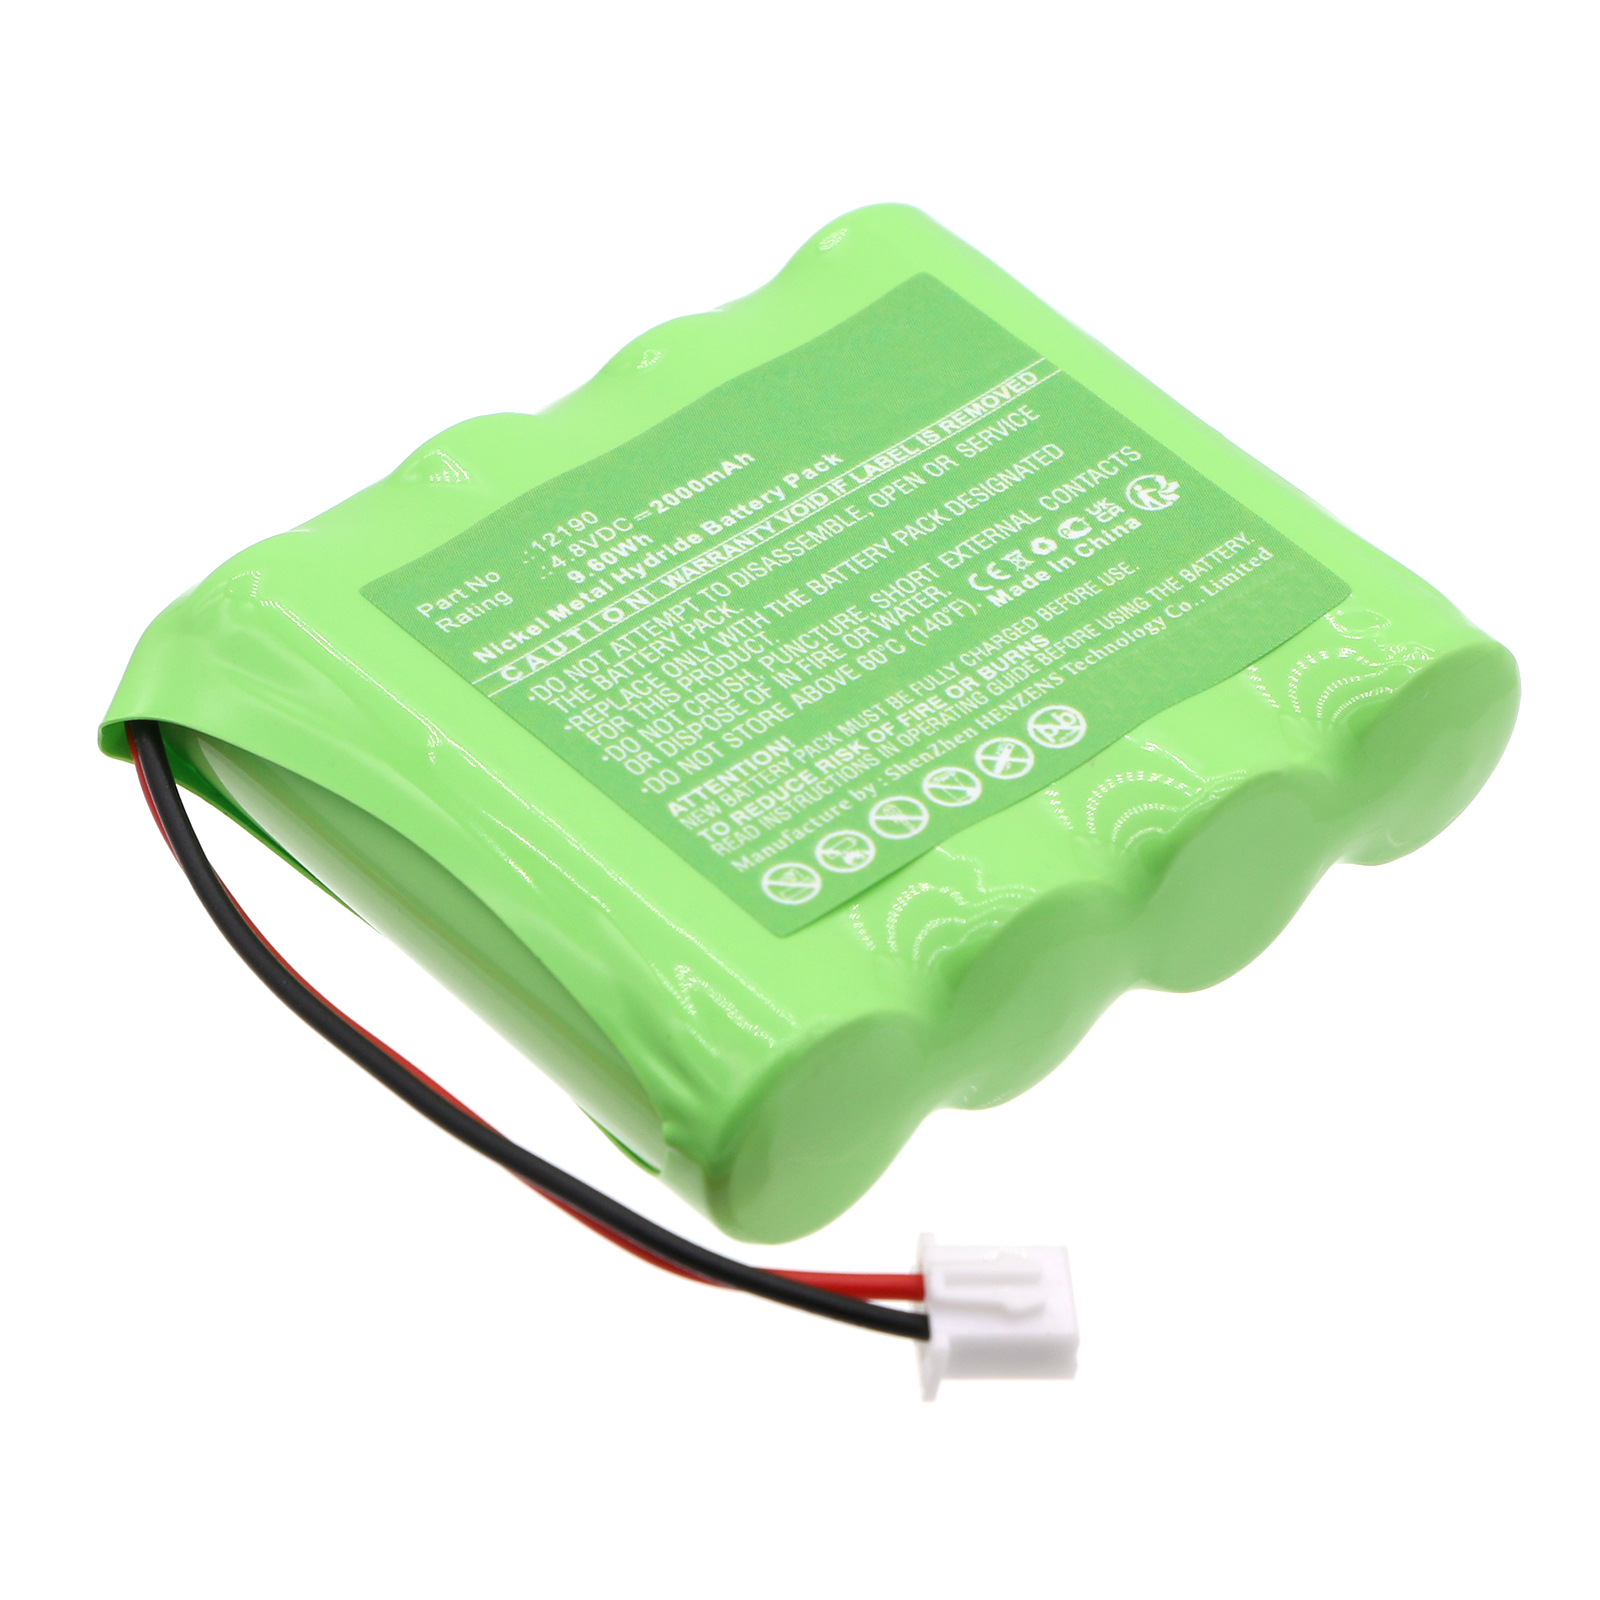 Synergy Digital Alarm System Battery, Compatible with LUPUS 12190 Alarm System Battery (Ni-MH, 4.8V, 2000mAh)